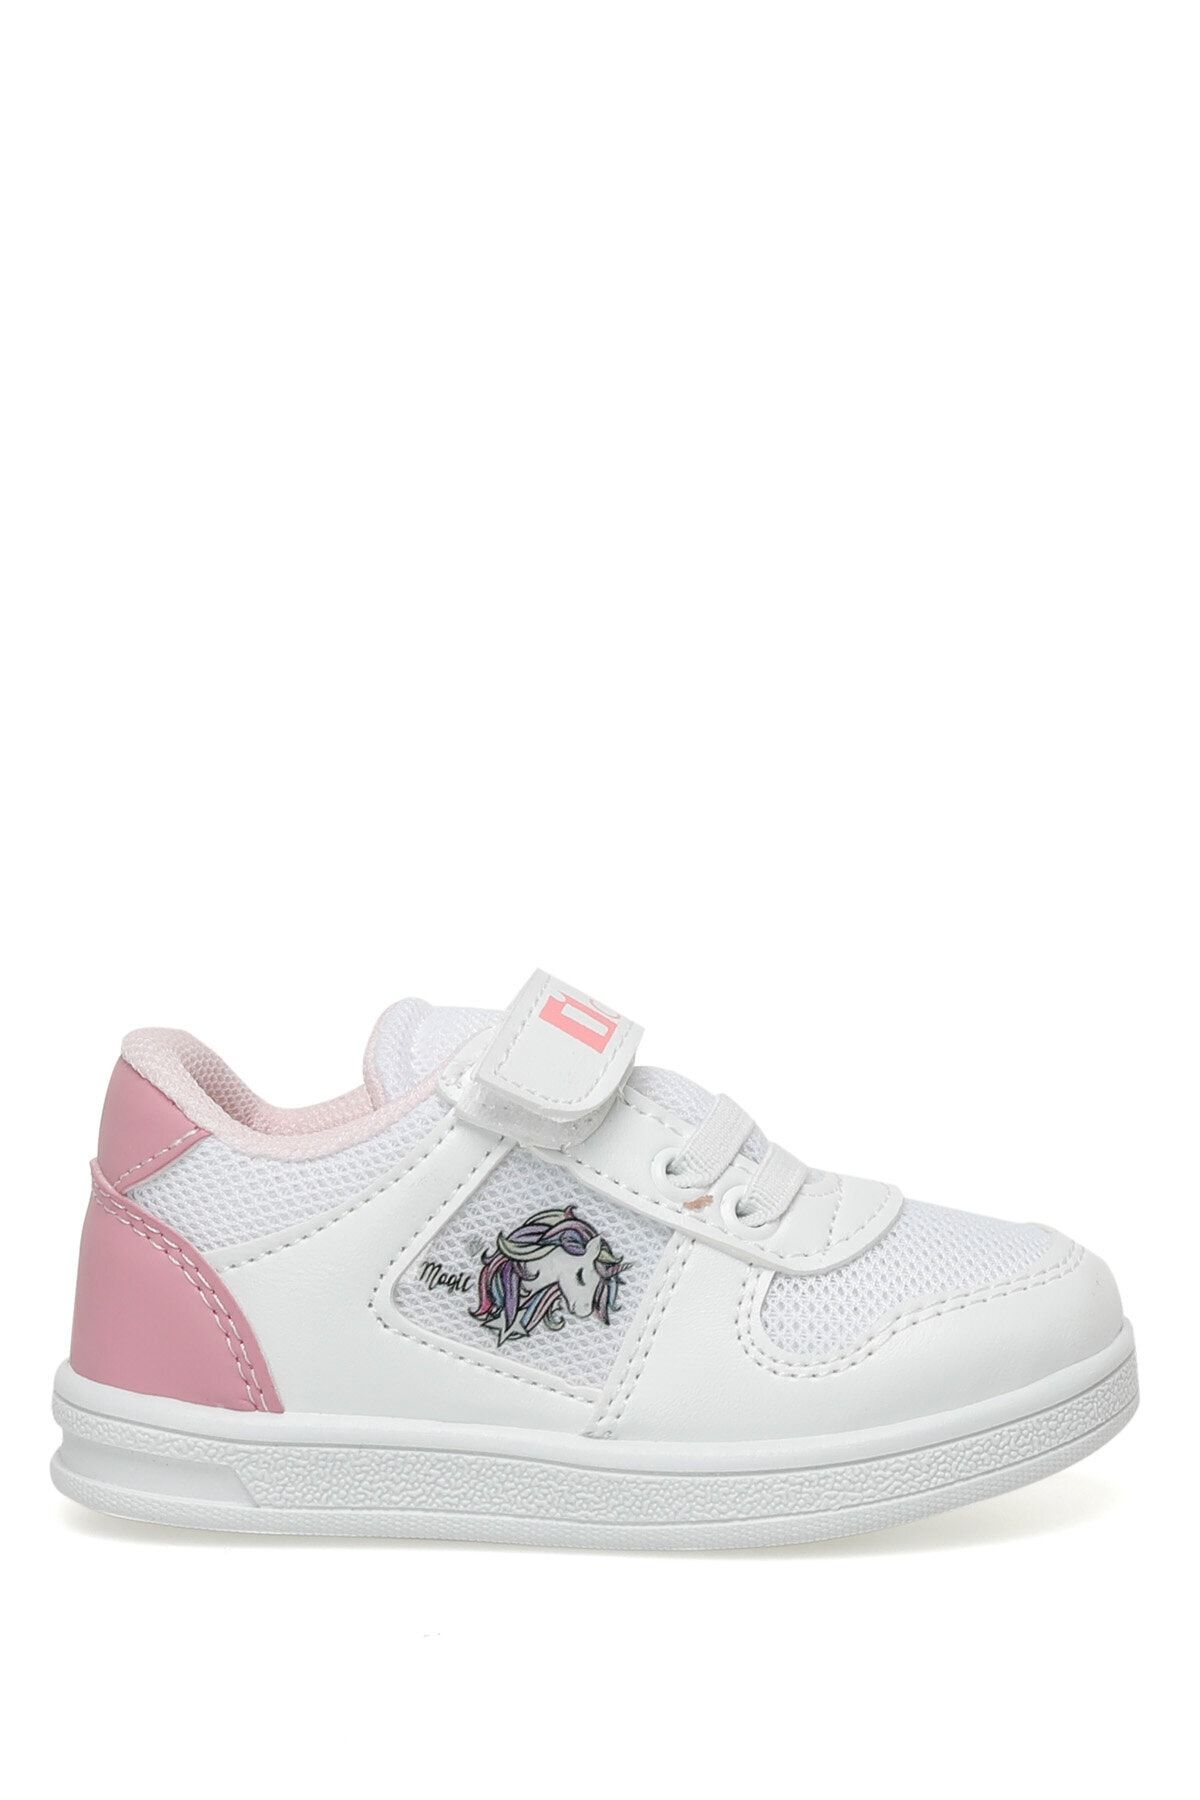 Icool Fermo 3fx Beyaz Kız Çocuk Sneaker